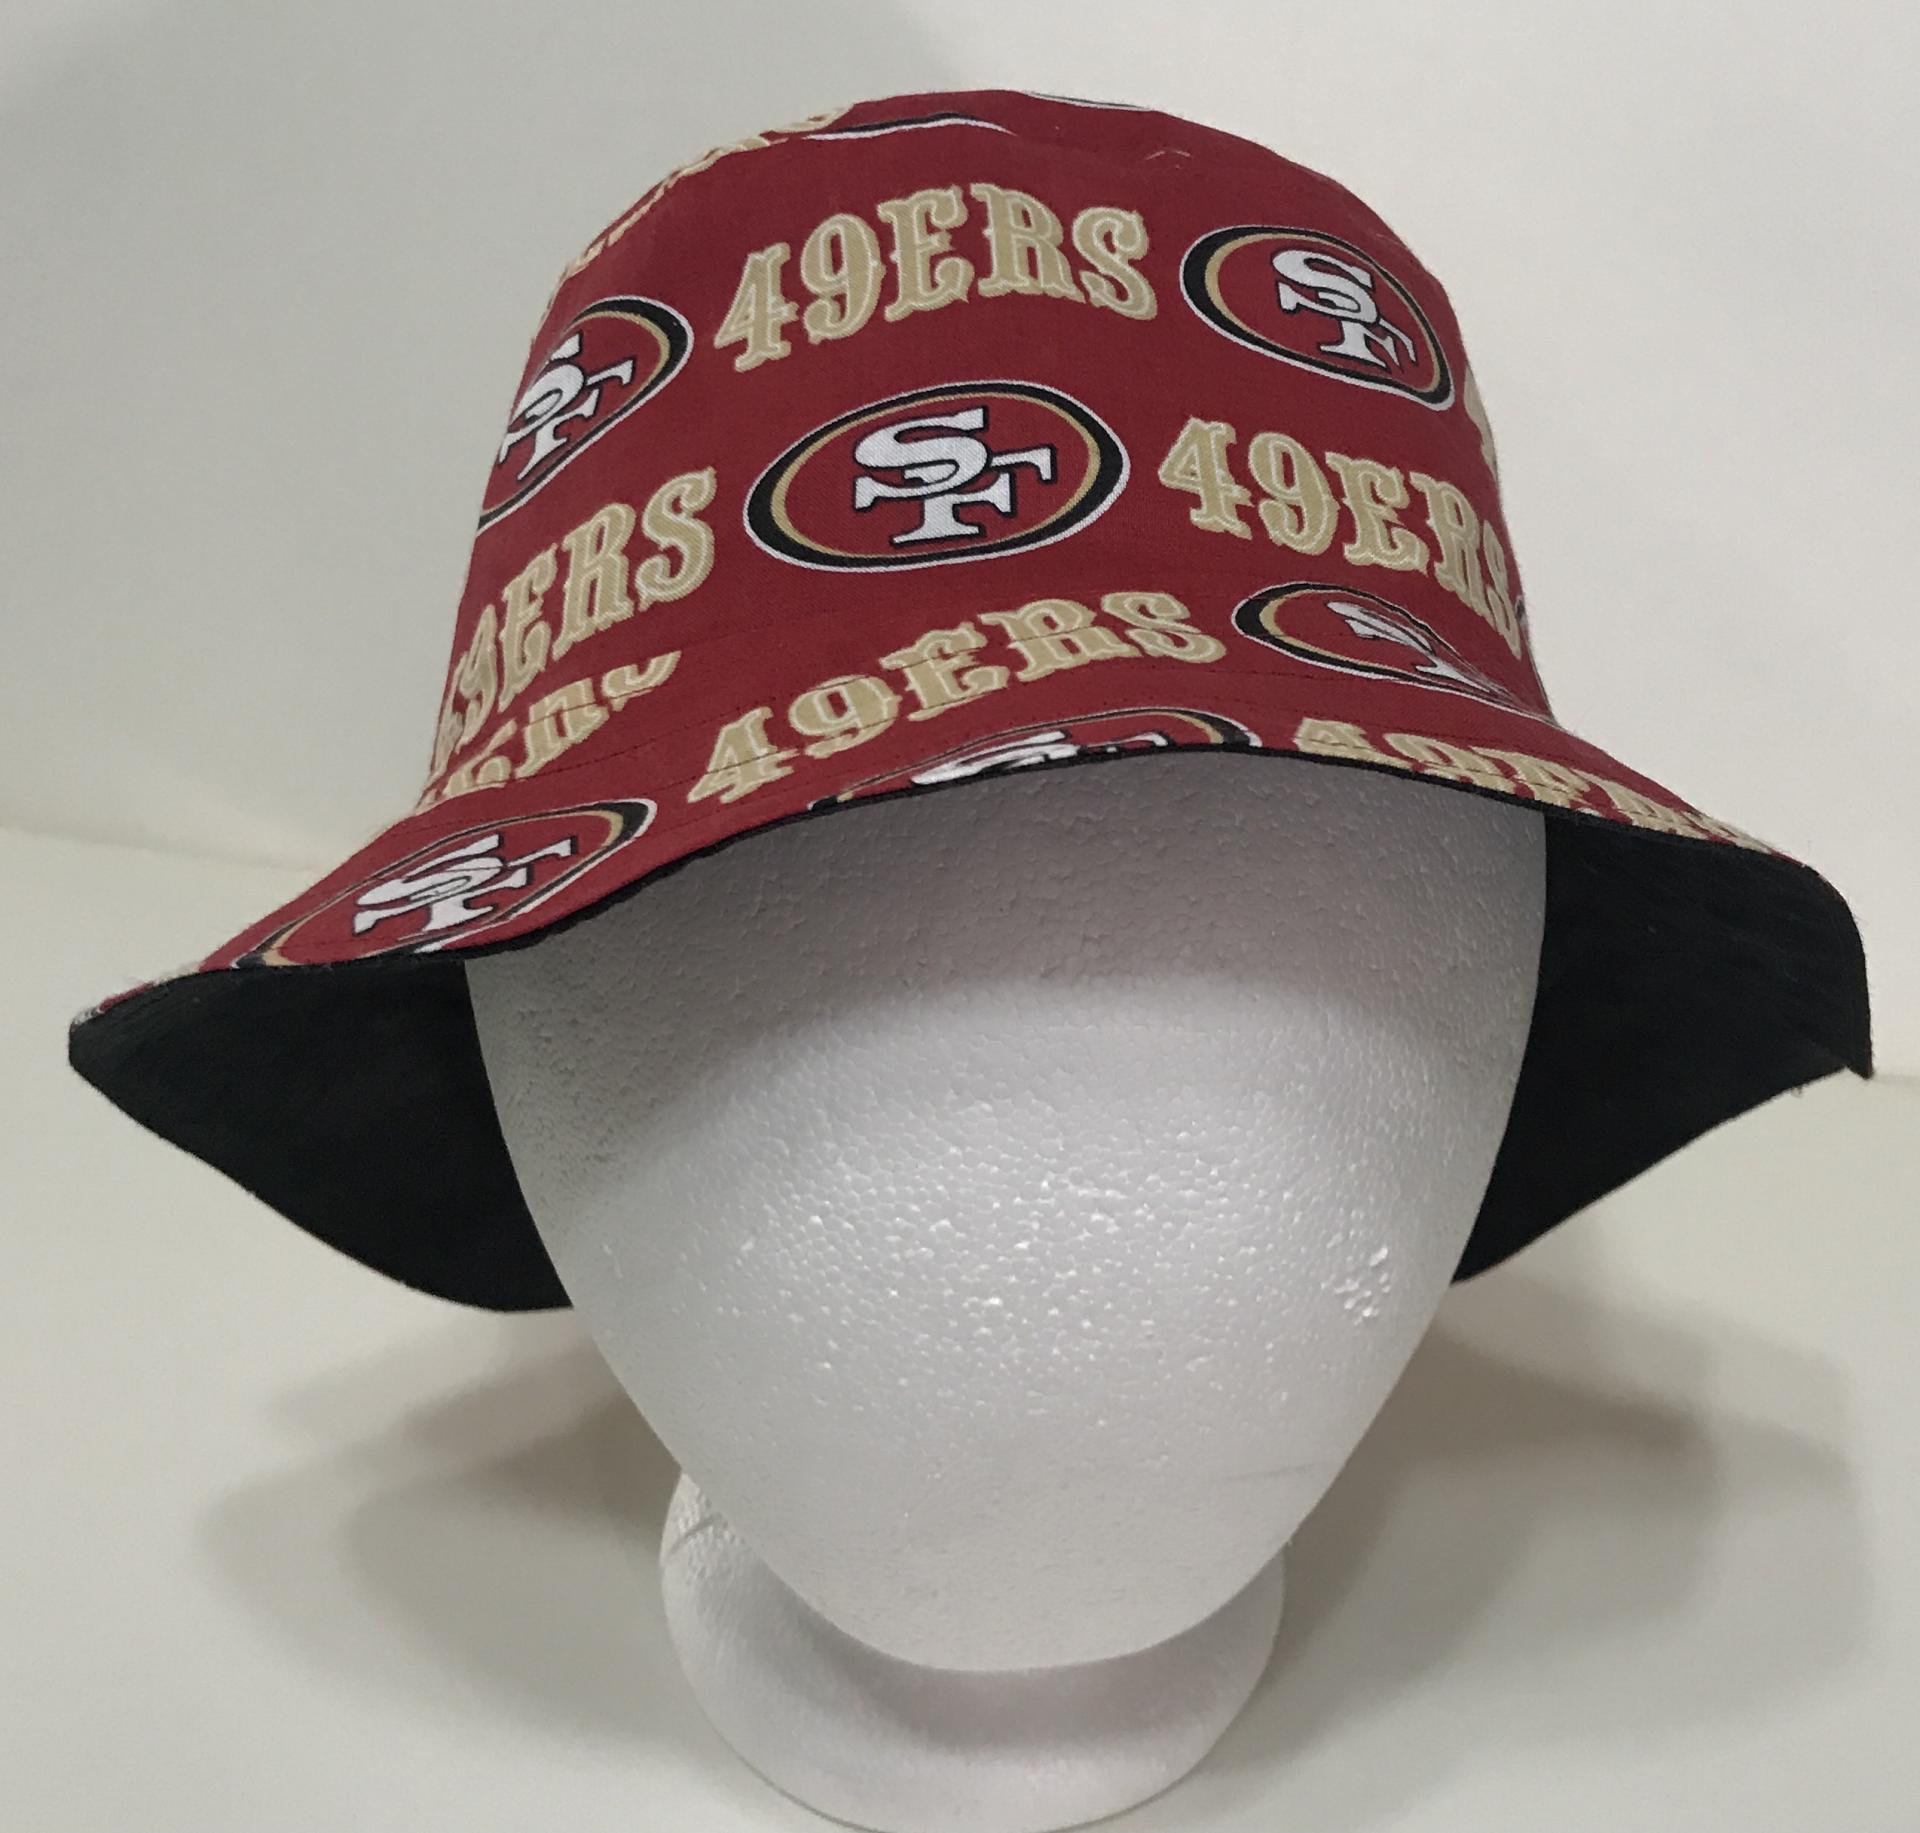 Front view, 49ers bucket hat, red, some black showing under brim